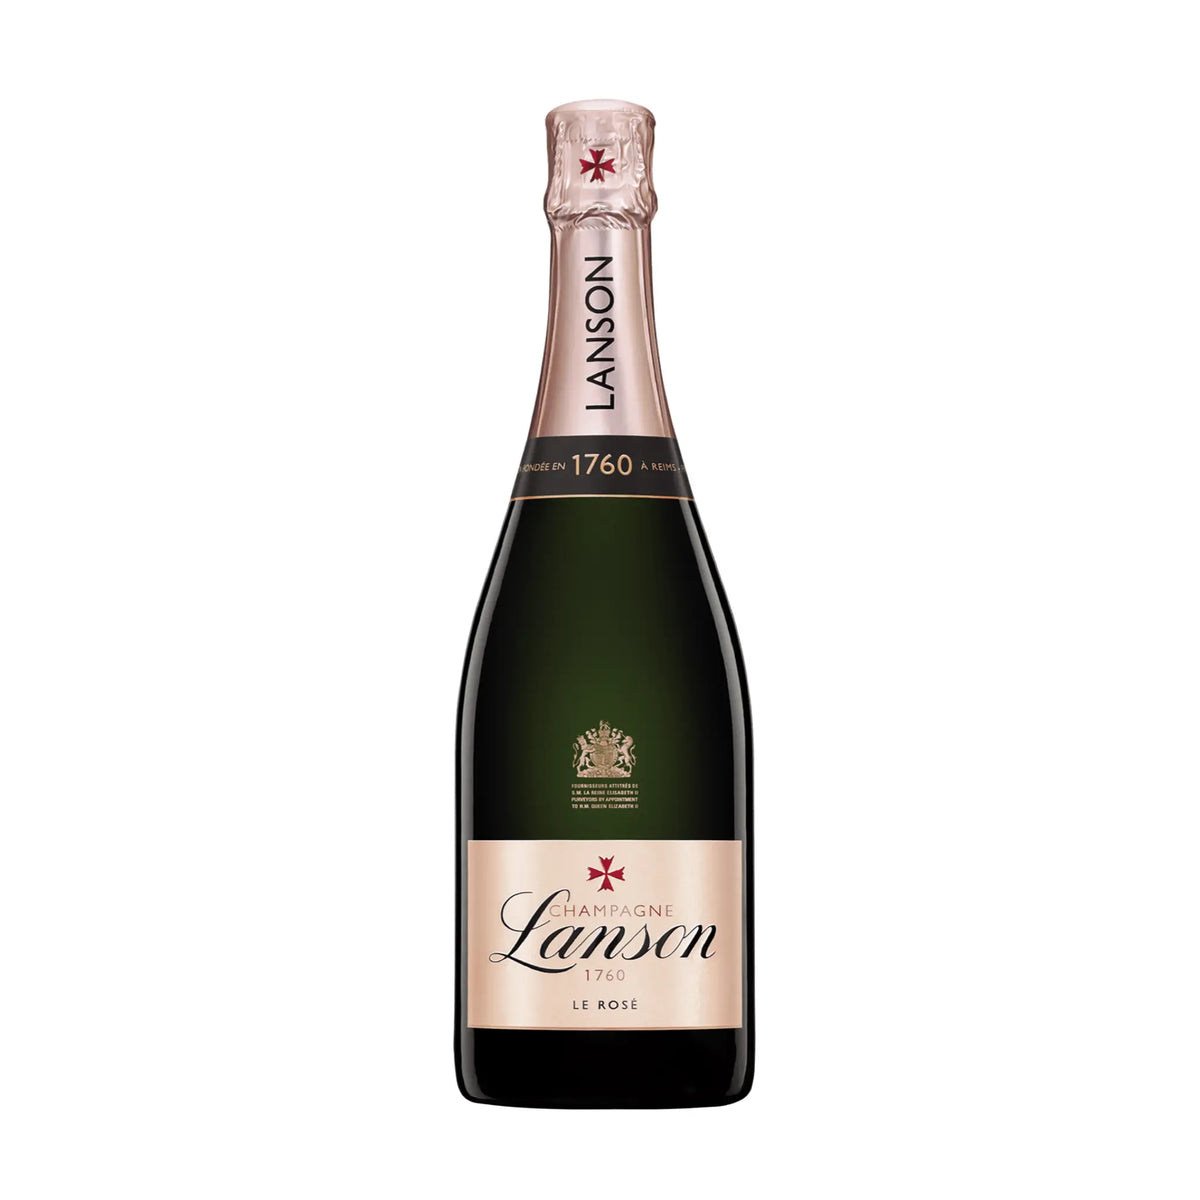 Champagne Lanson-Schaumwein-Champagner-Champagne-Frankreich-Le Rosé-WINECOM